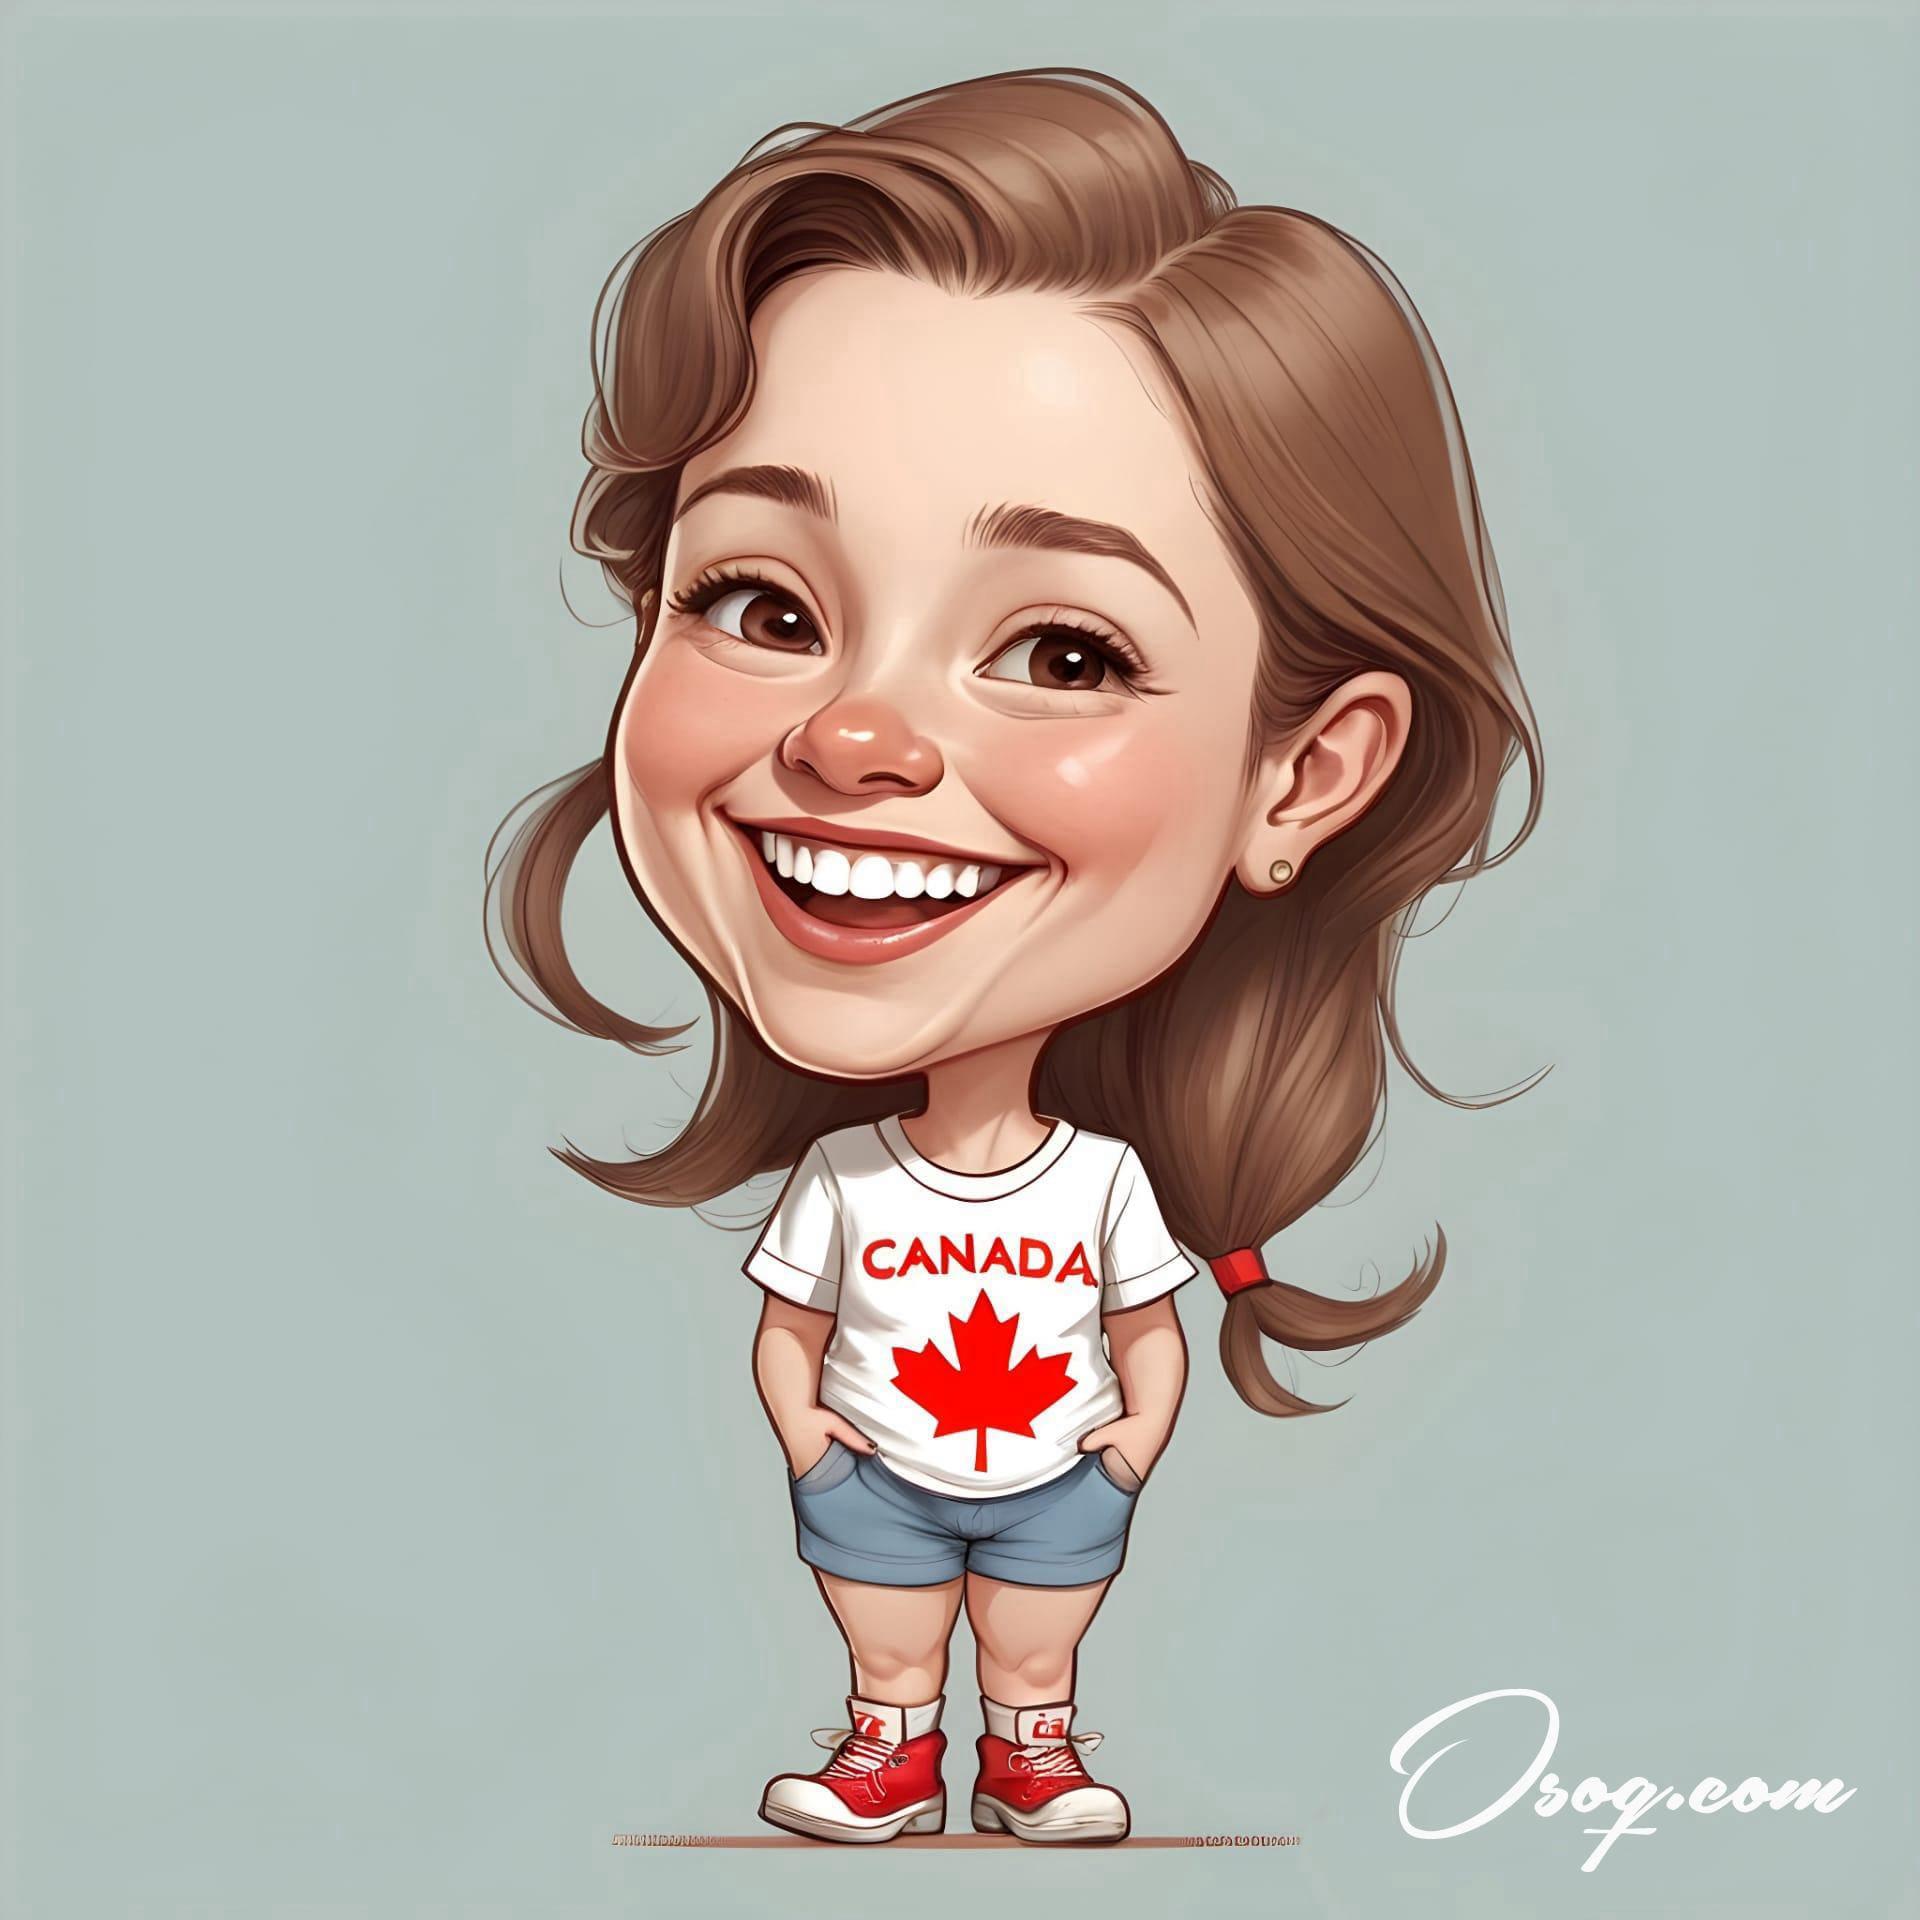 Canada cartoon 02